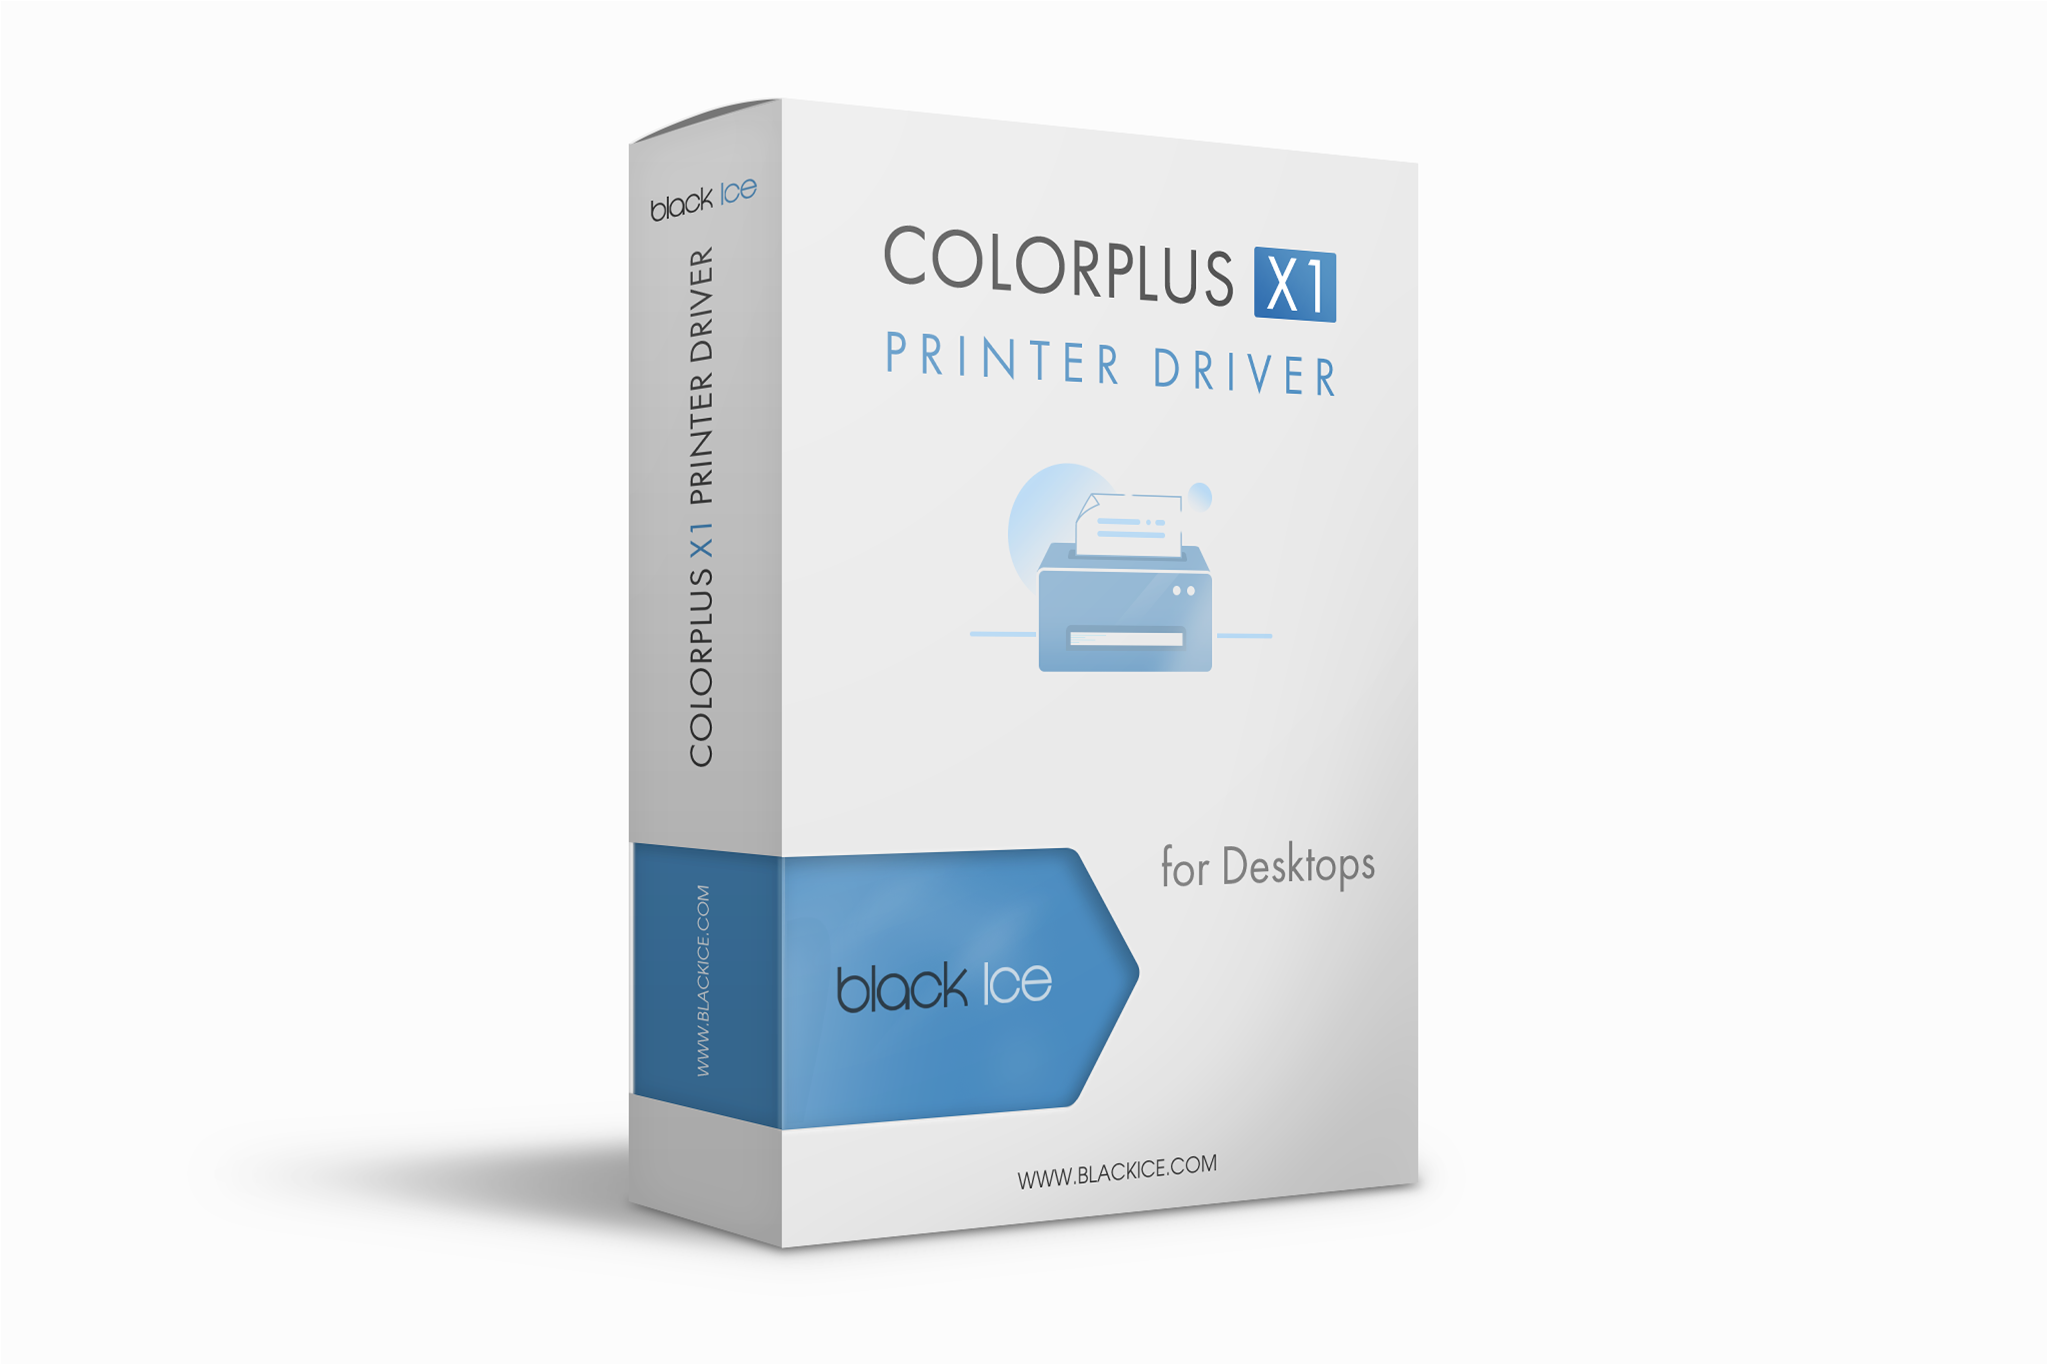 ColorPlus X1 Printer Driver Subscription (Single License and 3 multi-printers or ports)